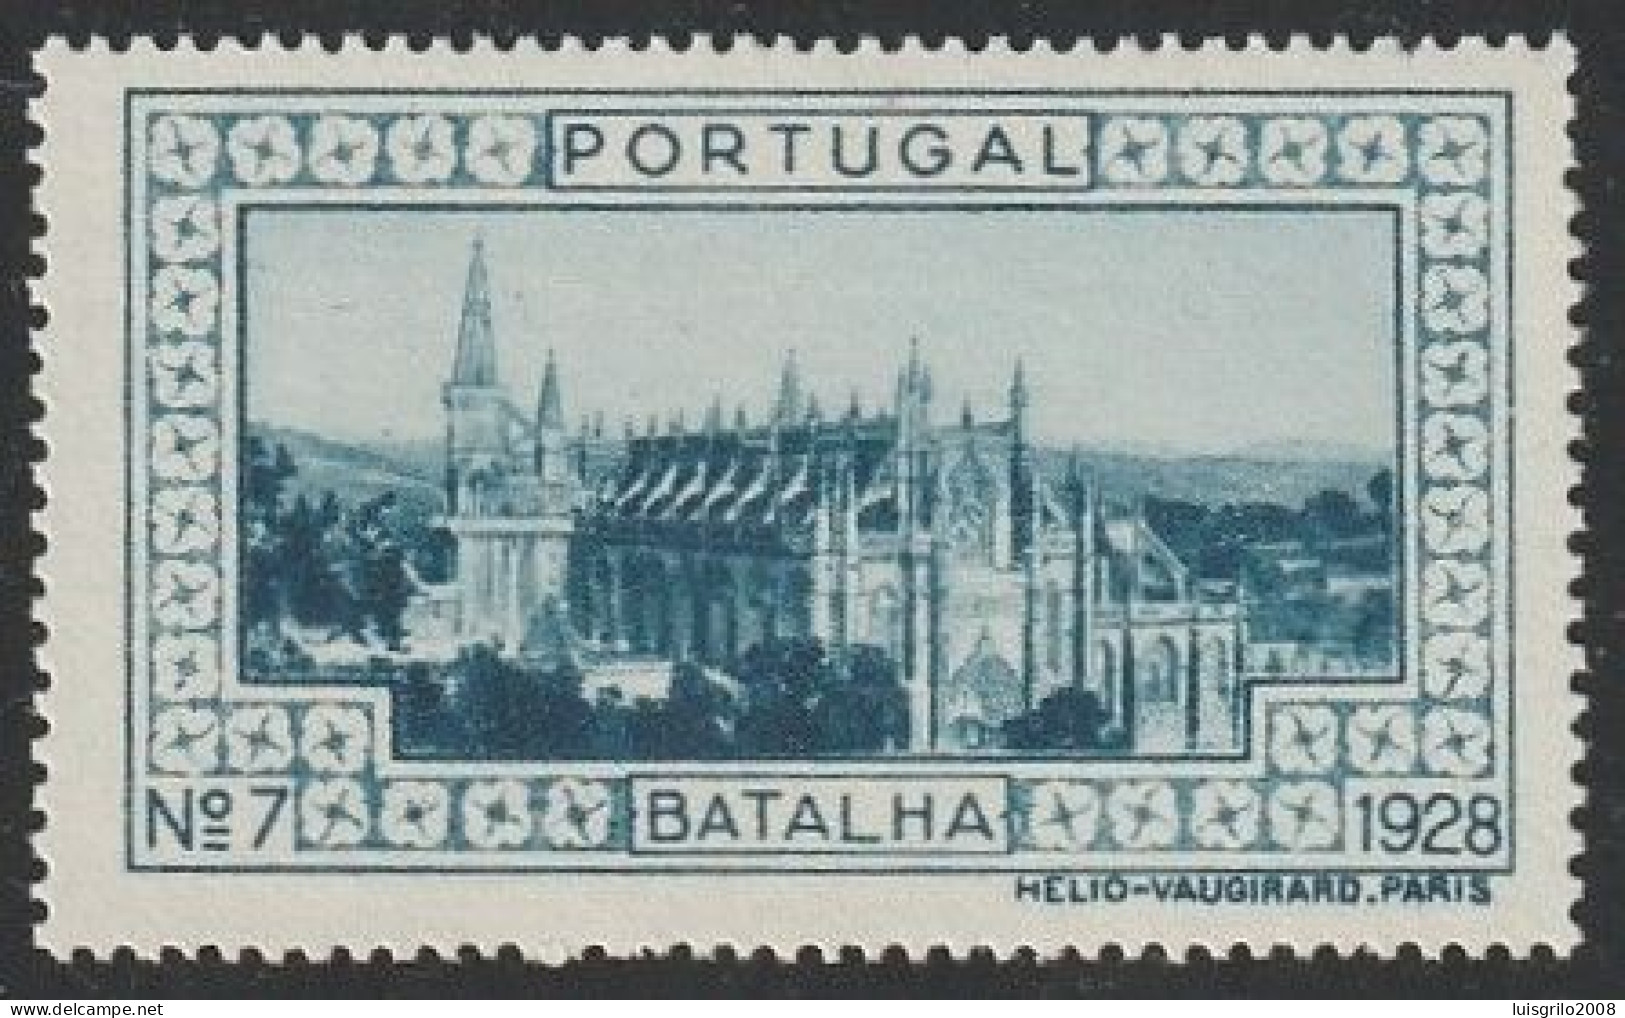 Vignette/ Vinheta, Portugal - 1928, Paisagens E Monumentos. Batalha -||- MNG, Sans Gomme - Emisiones Locales